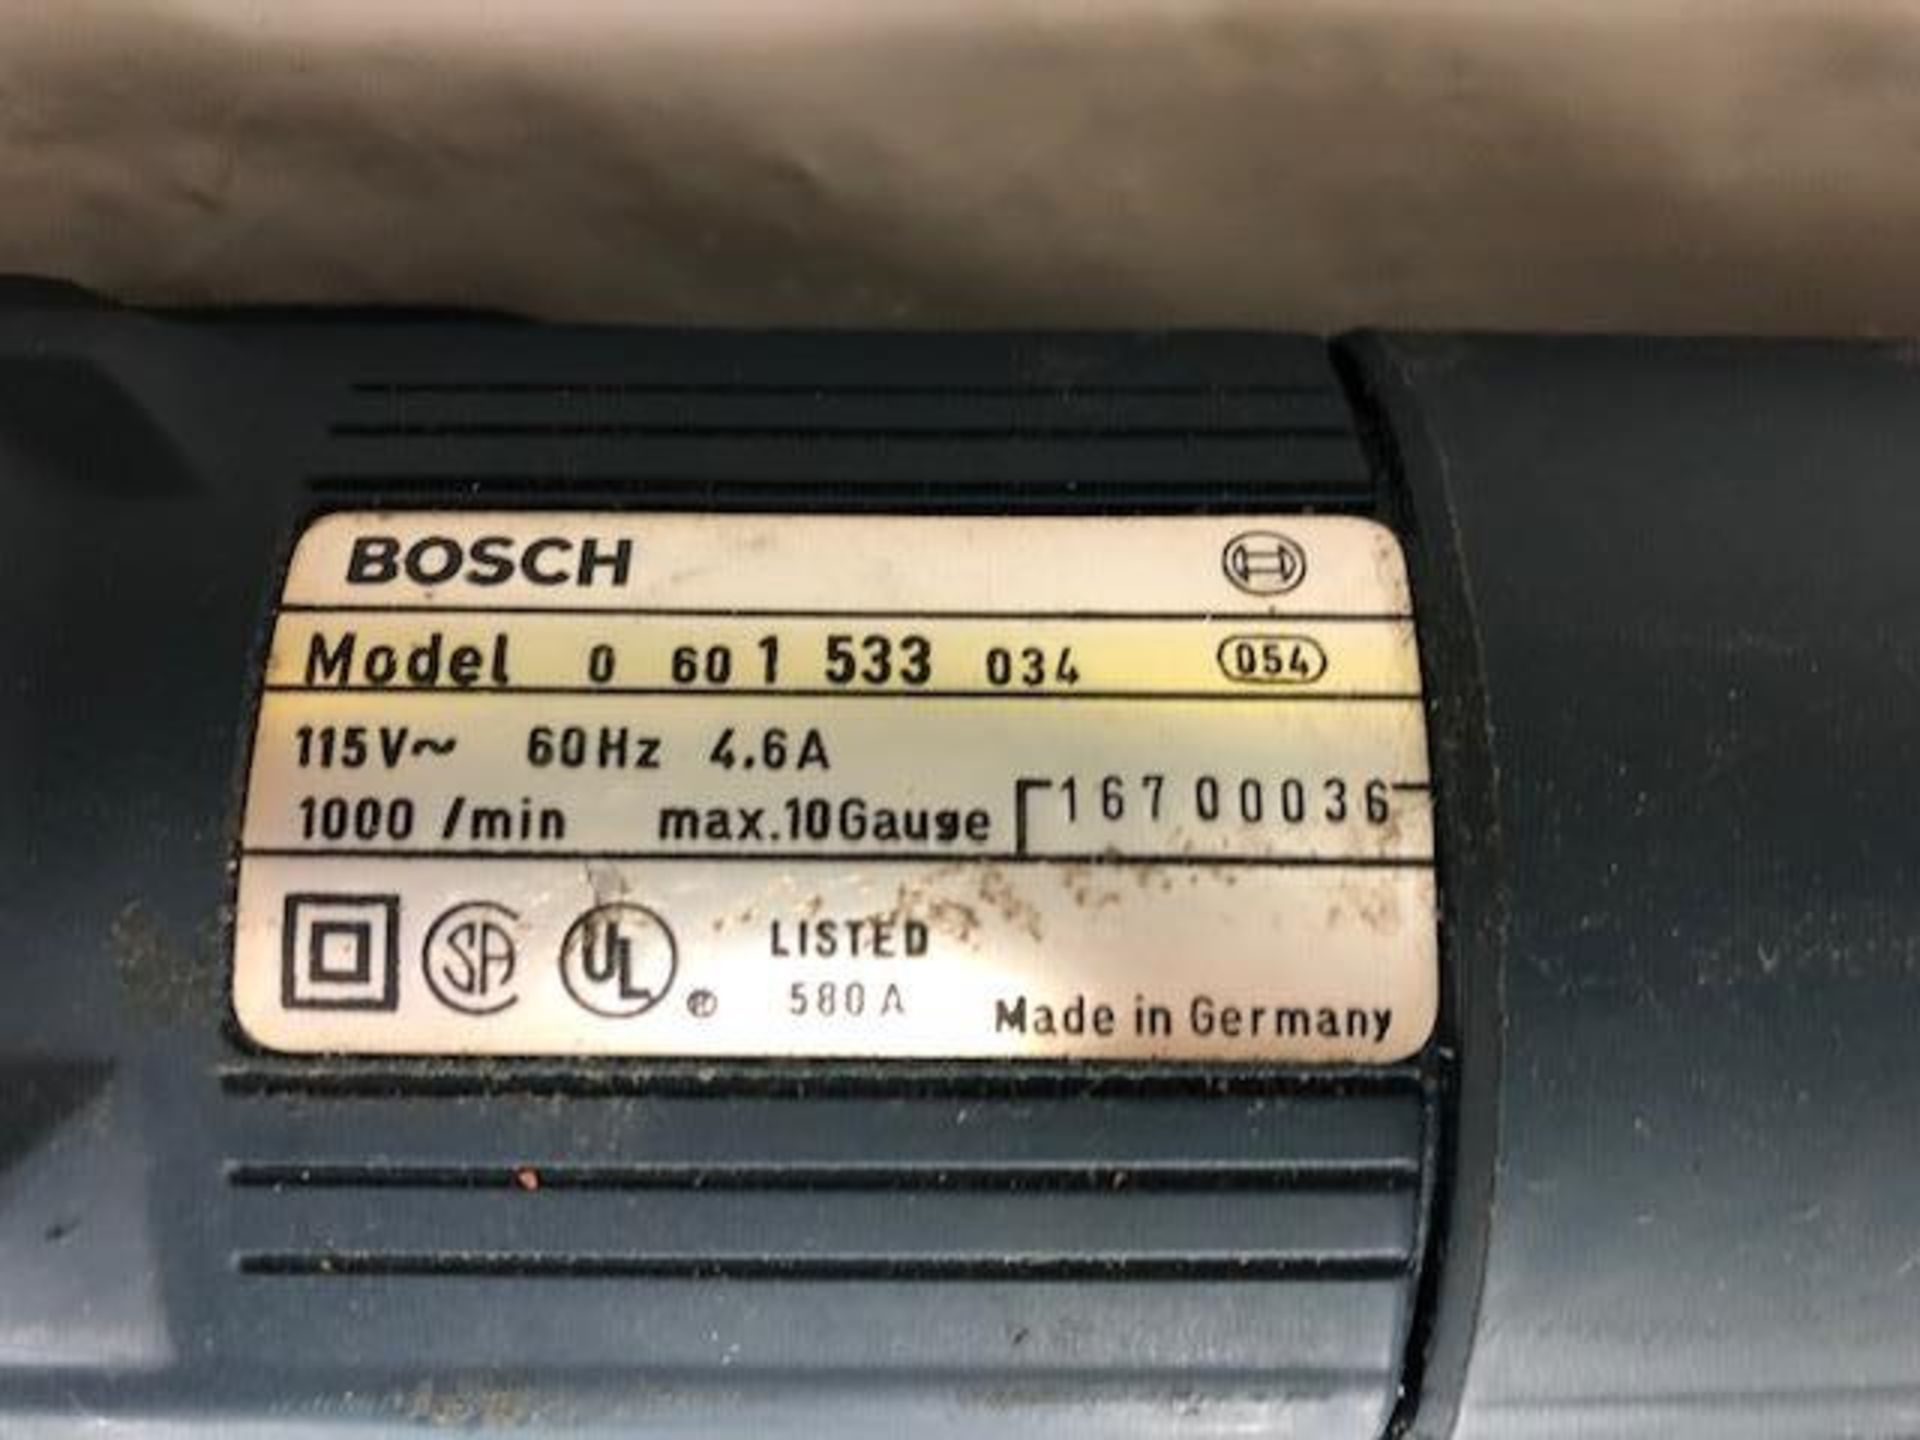 BOSCH, 1533, 110 V AC, ELECTRIC SHEET NIPPER, 10 GAUGE MAX. - Image 3 of 4